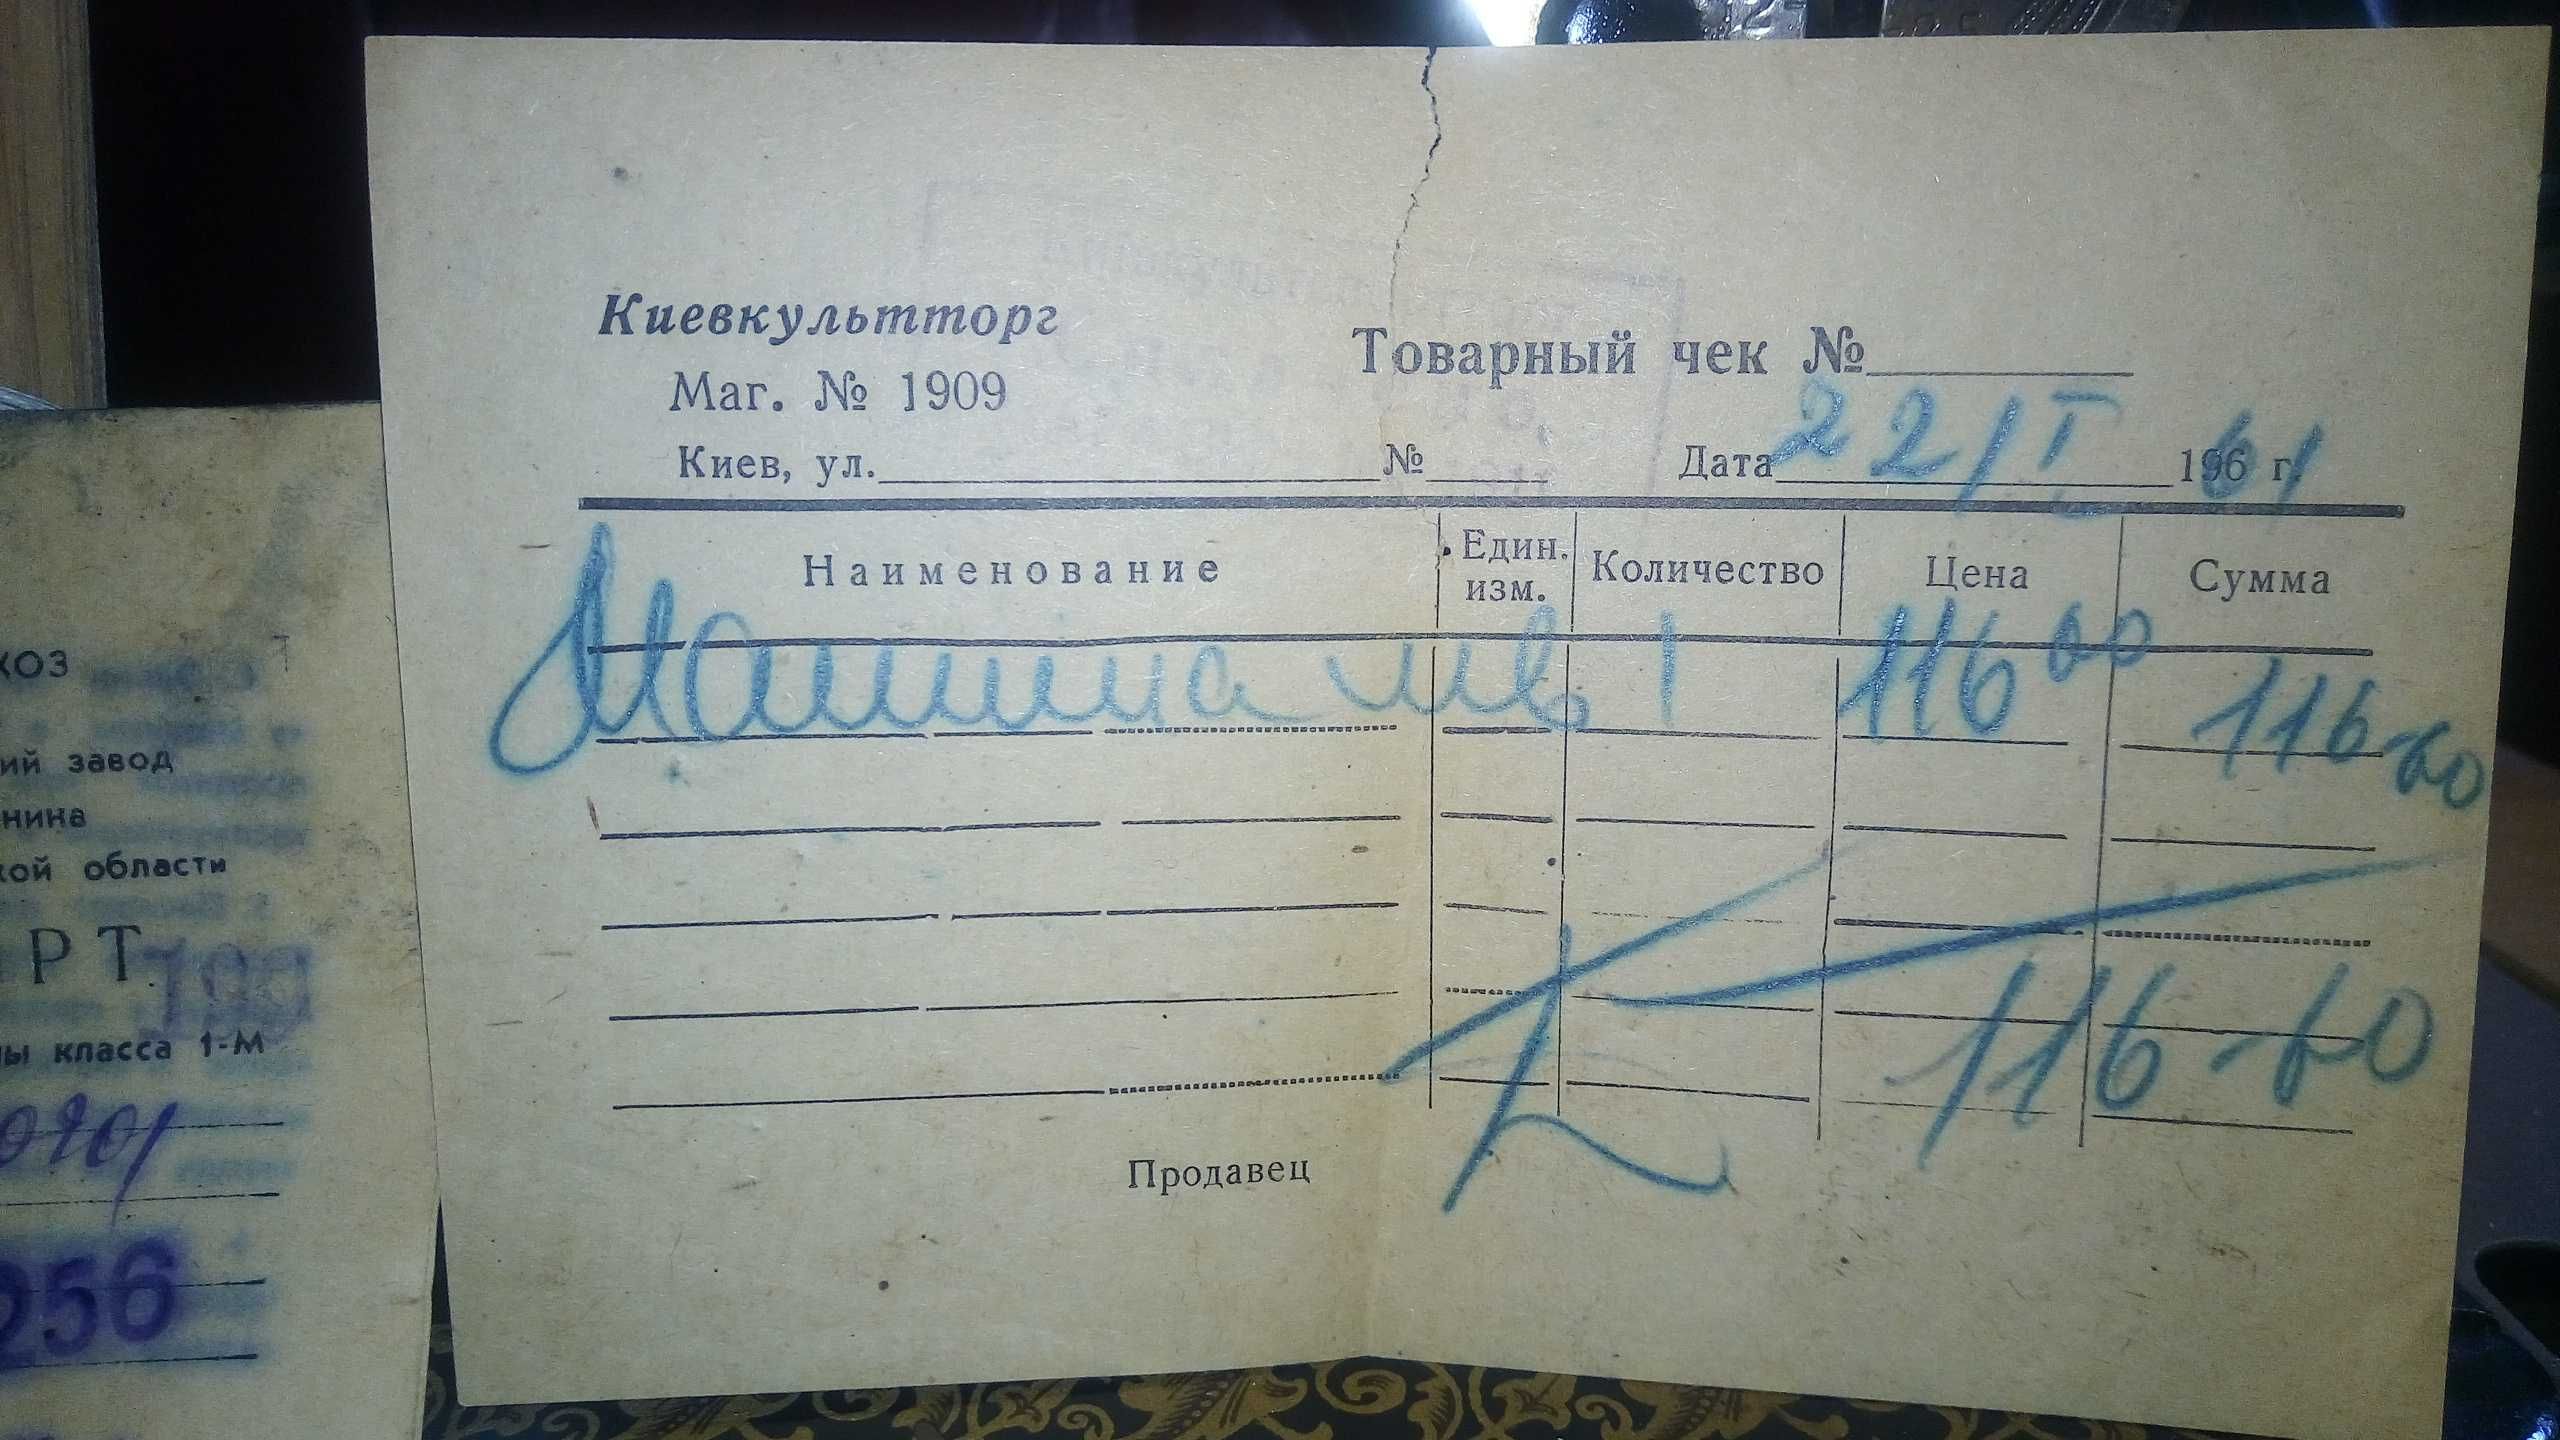 Швейная машина класса 1-м, ПМЗ им. Калинина, Подольск, 1961 год